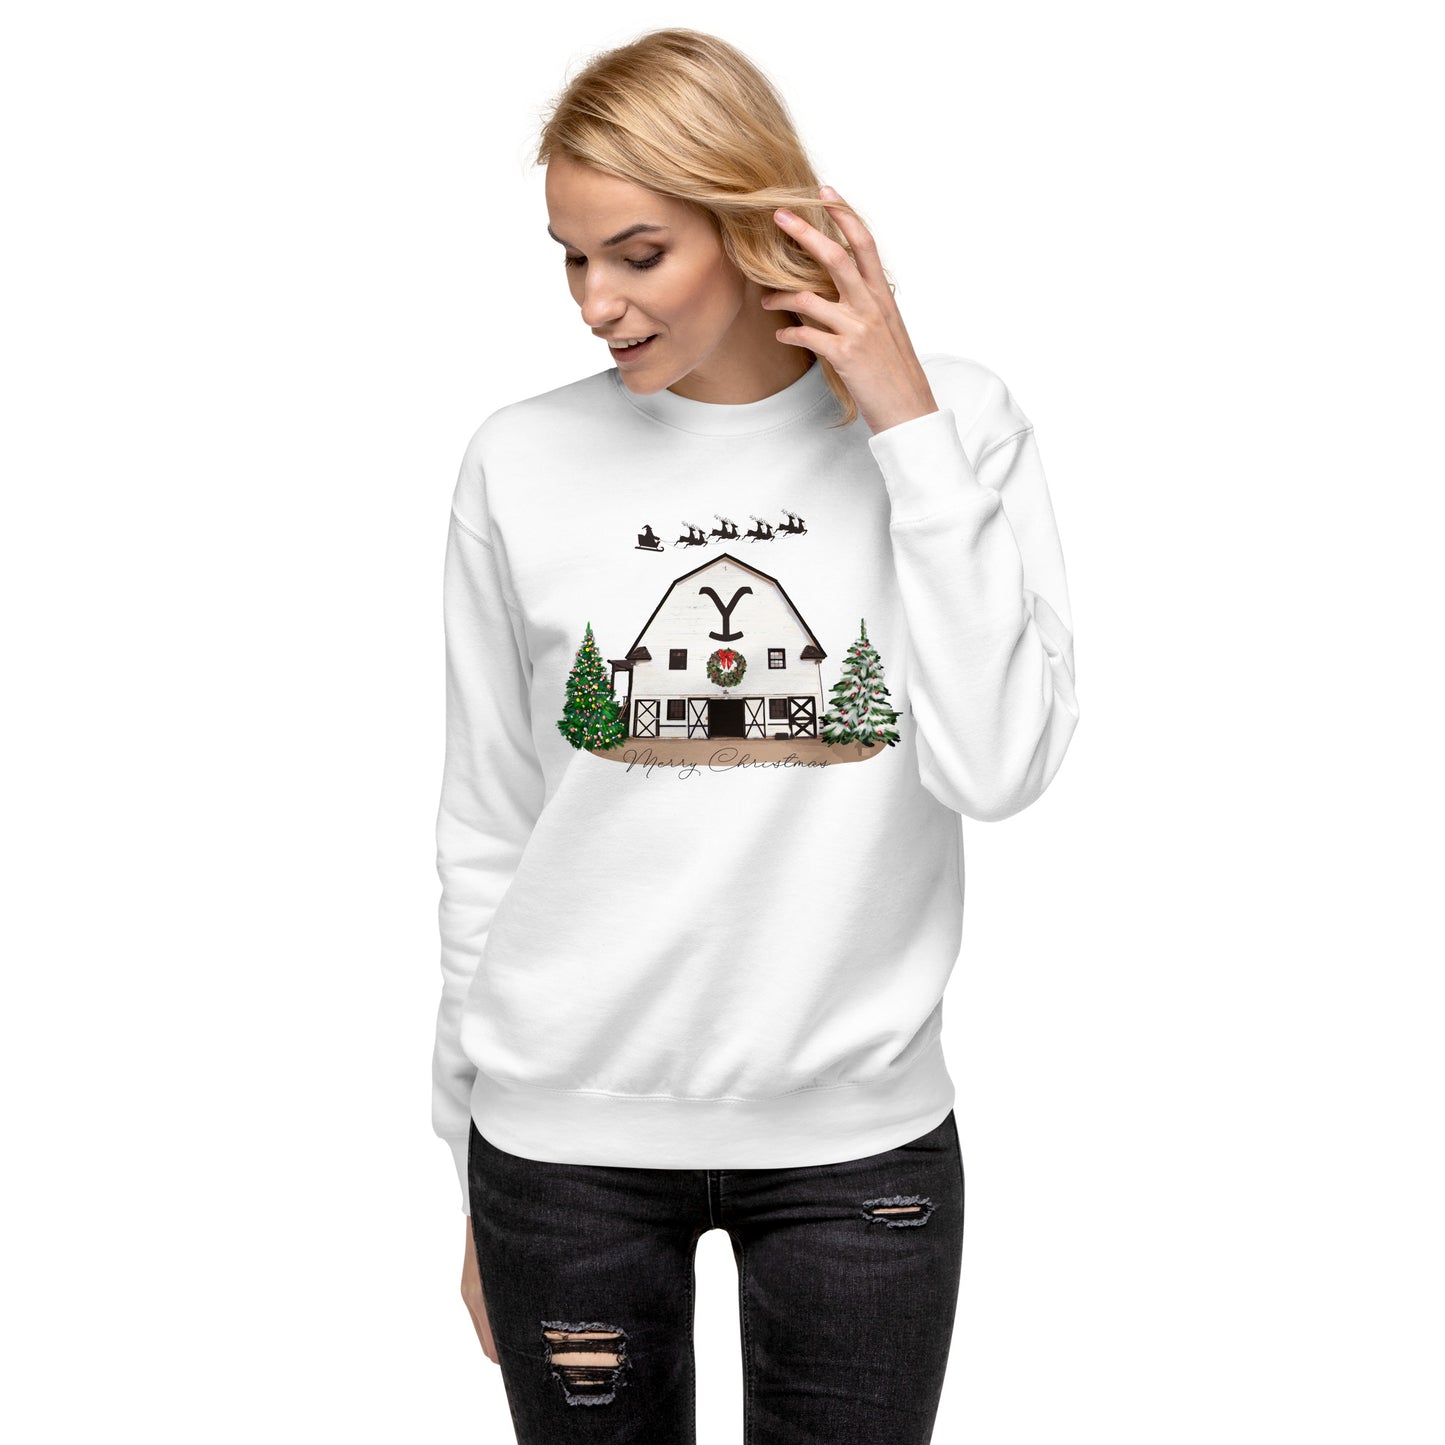 Yellowstone Barn Farmhouse Christmas Unisex Premium Sweatshirt